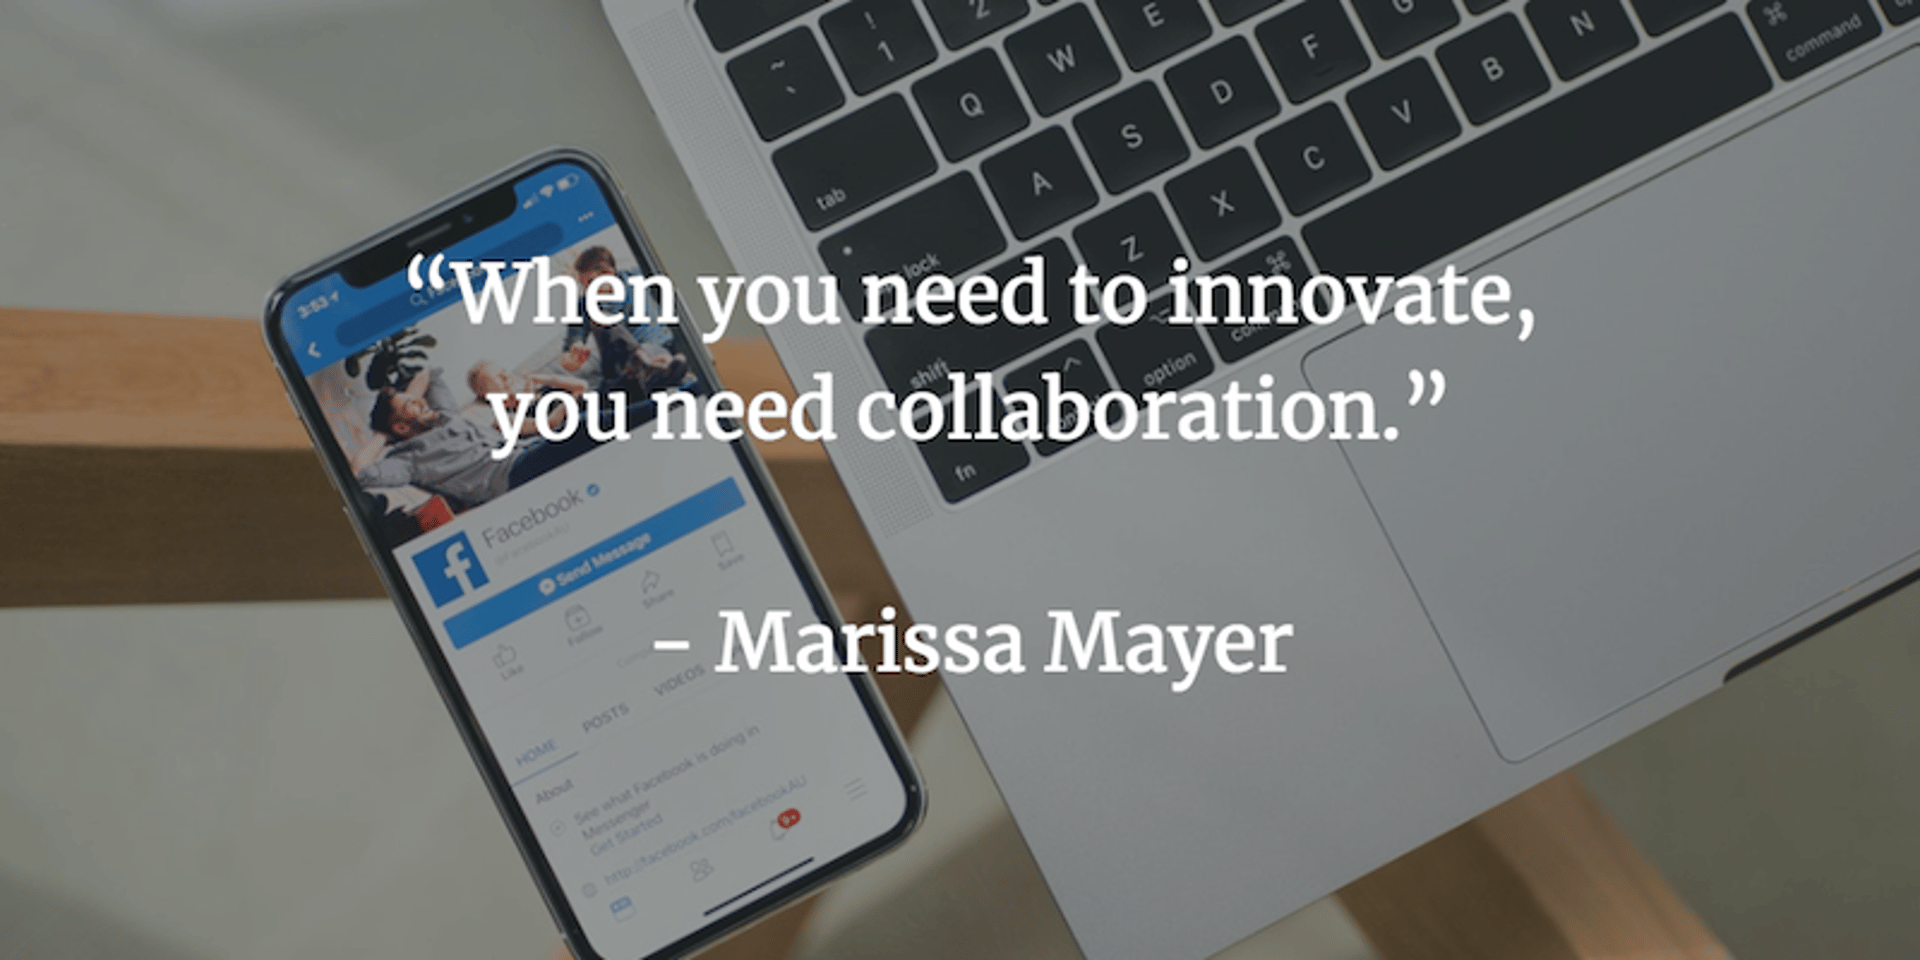 Marissa Mayer Team Collaboration Quote